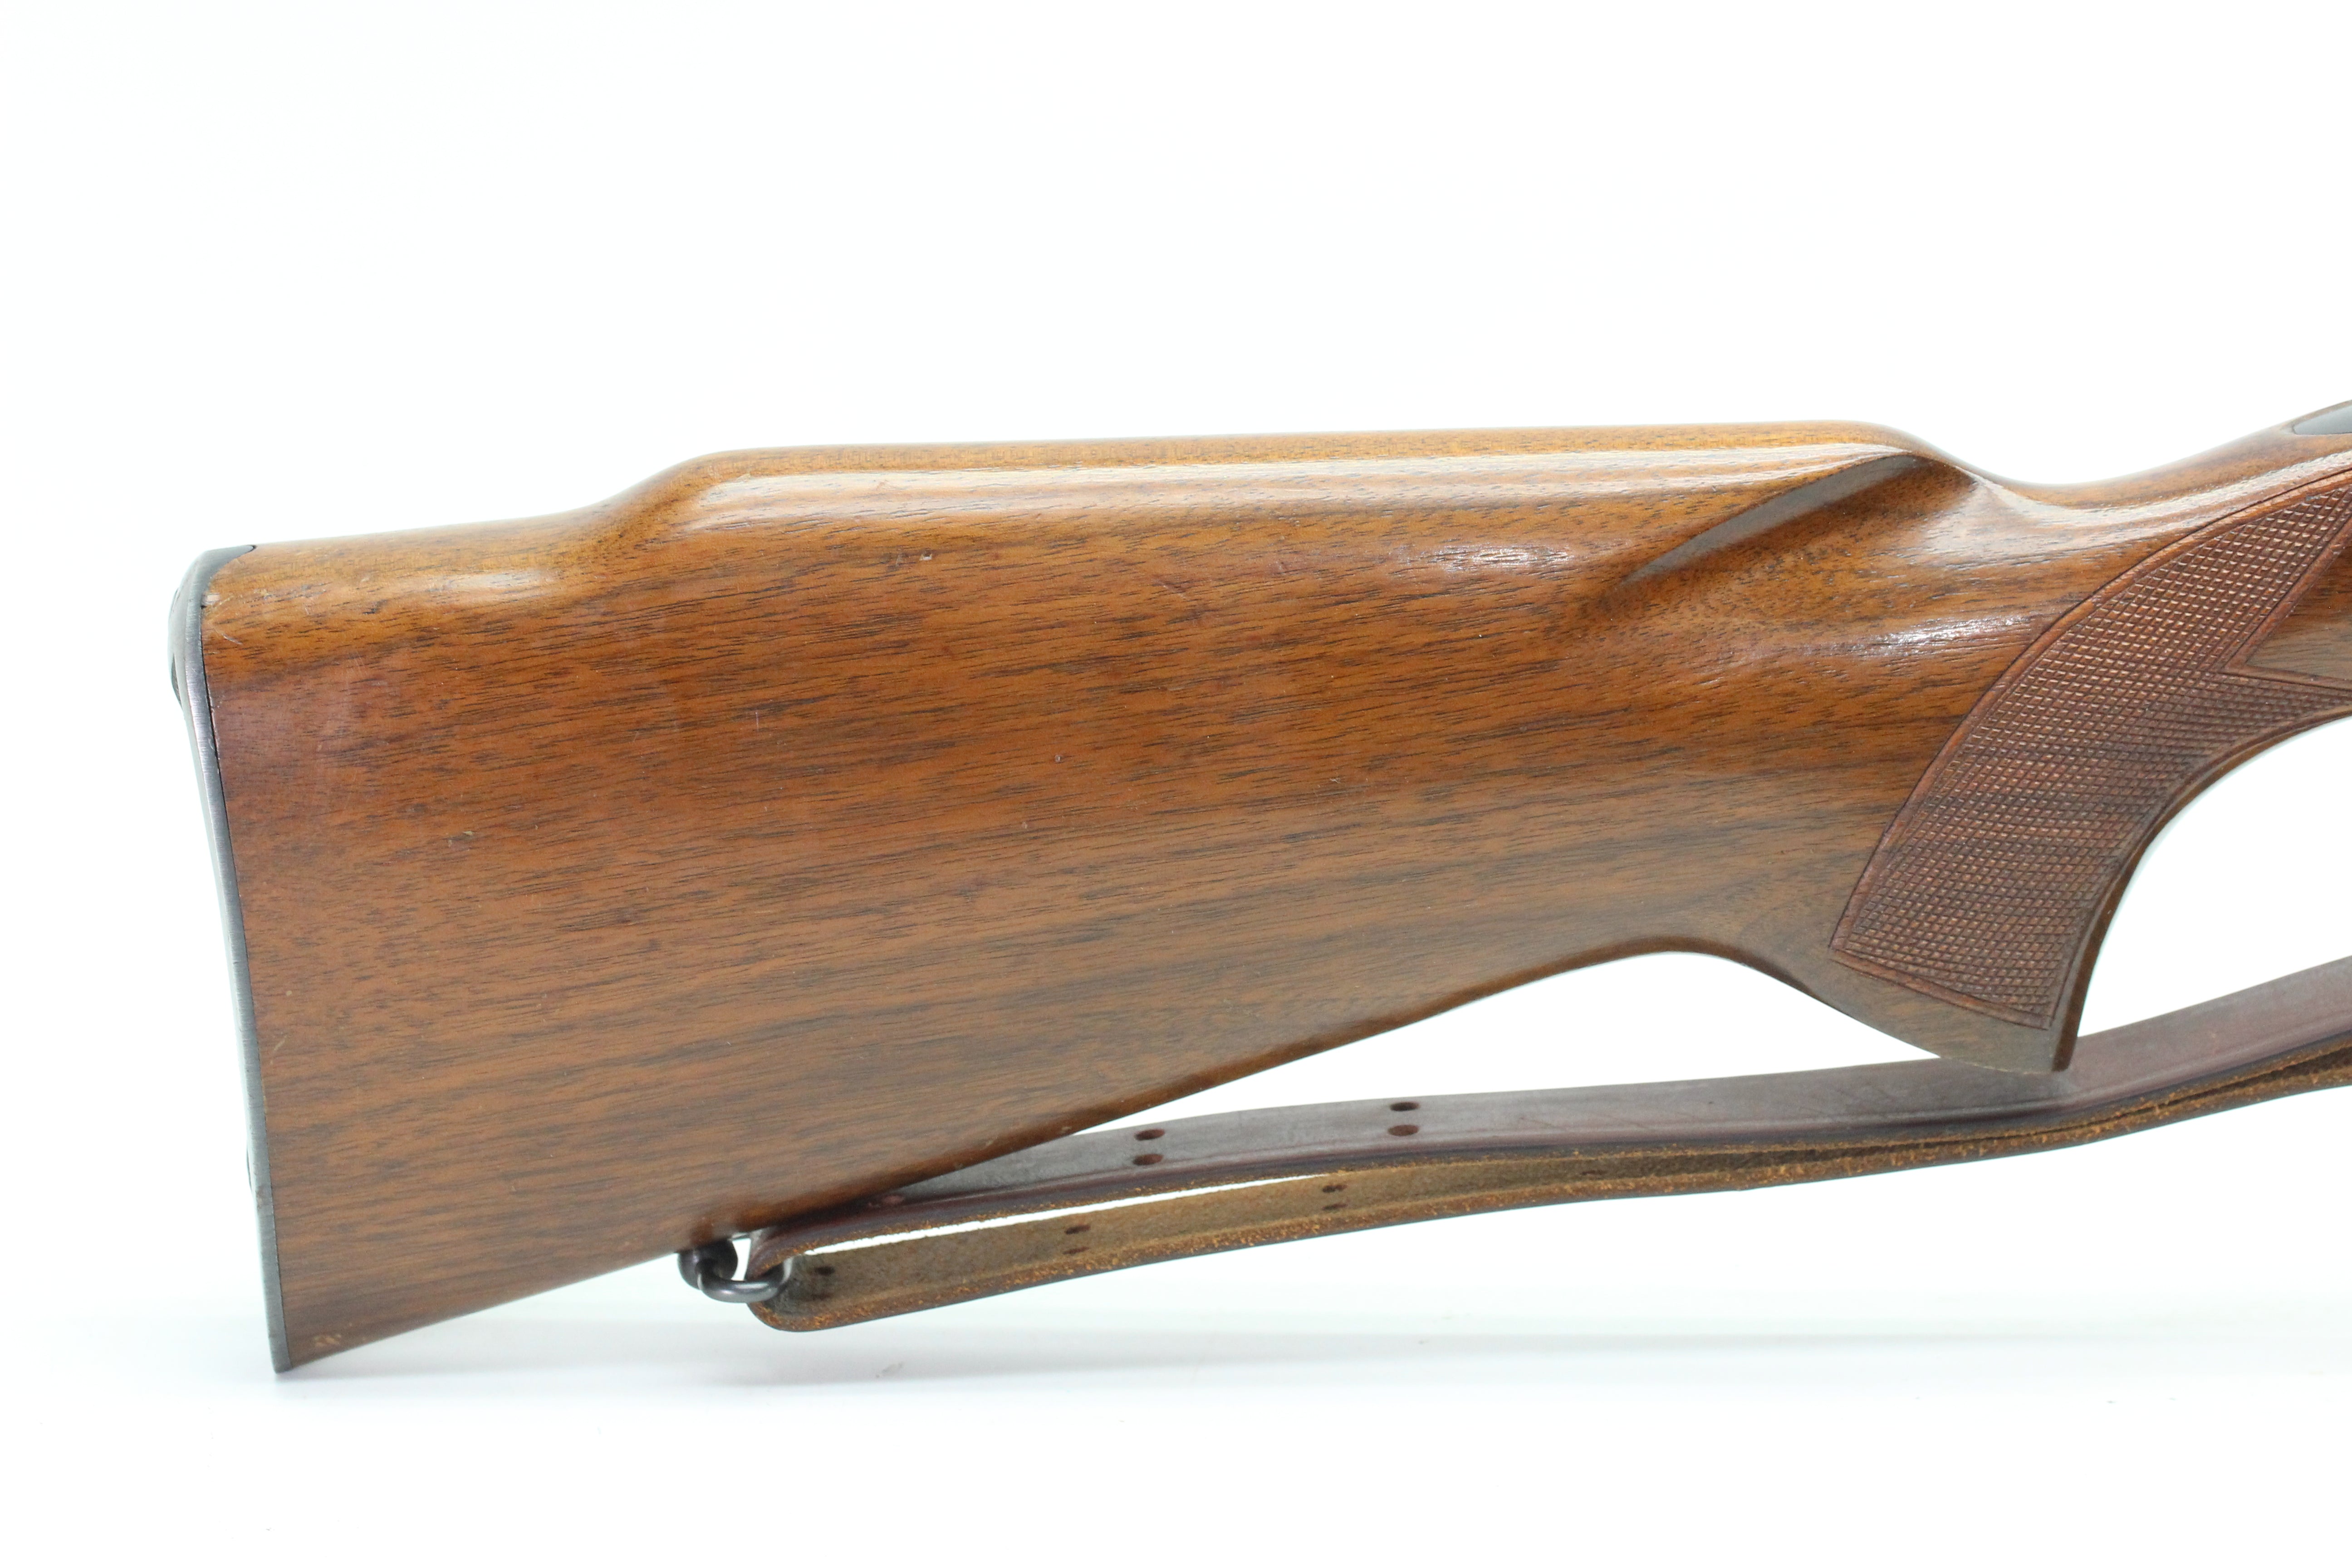 .300 H&H Magnum Standard Rifle - 1955